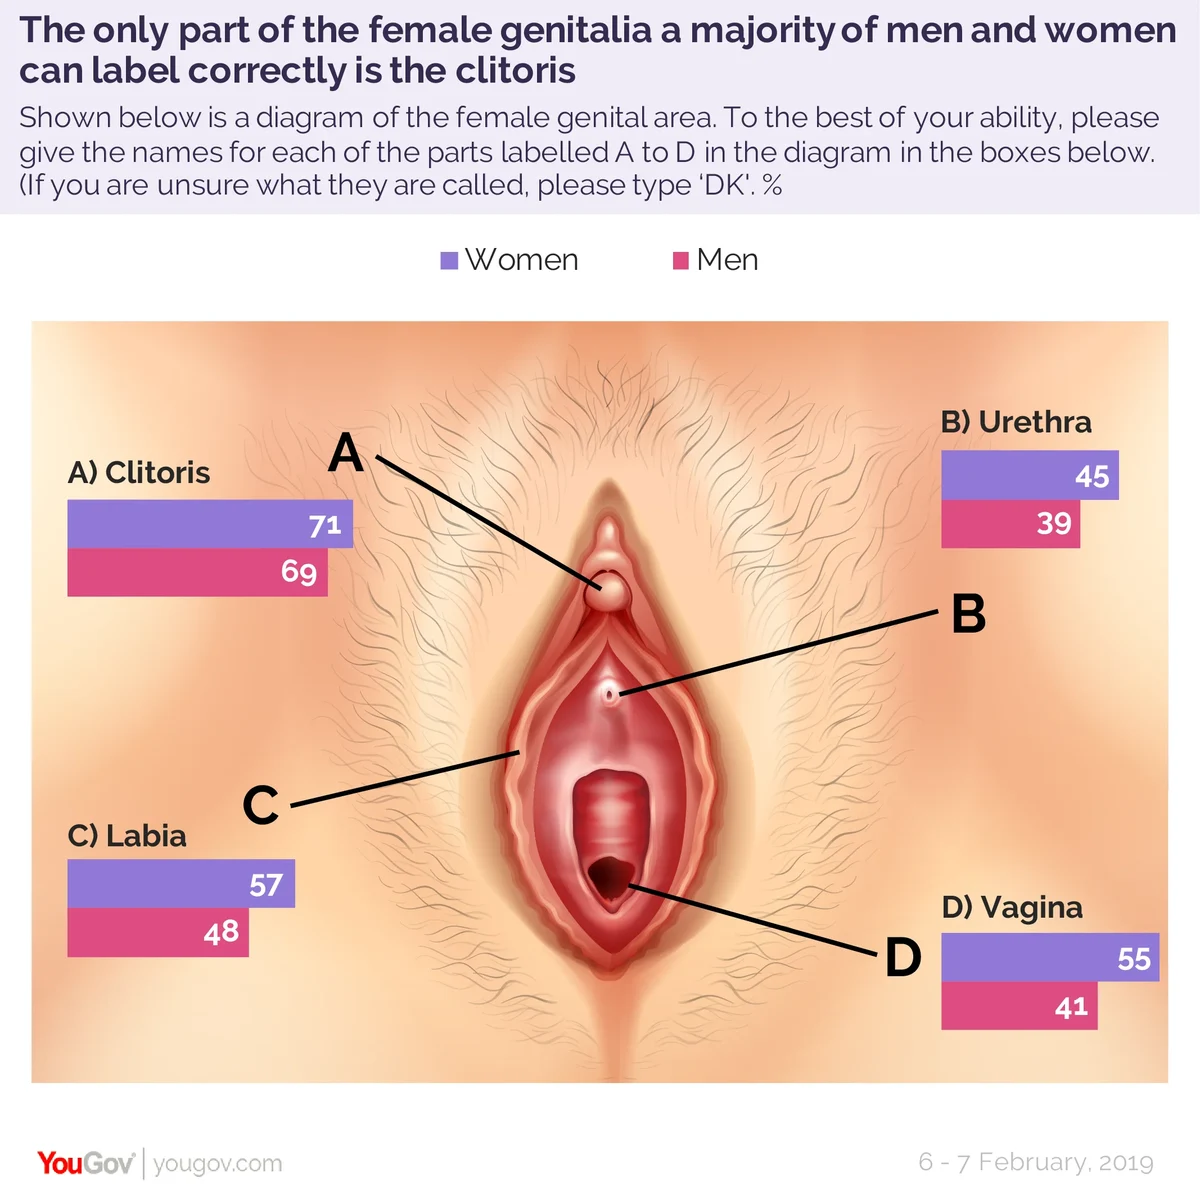 Anatomy of the female breast [69]